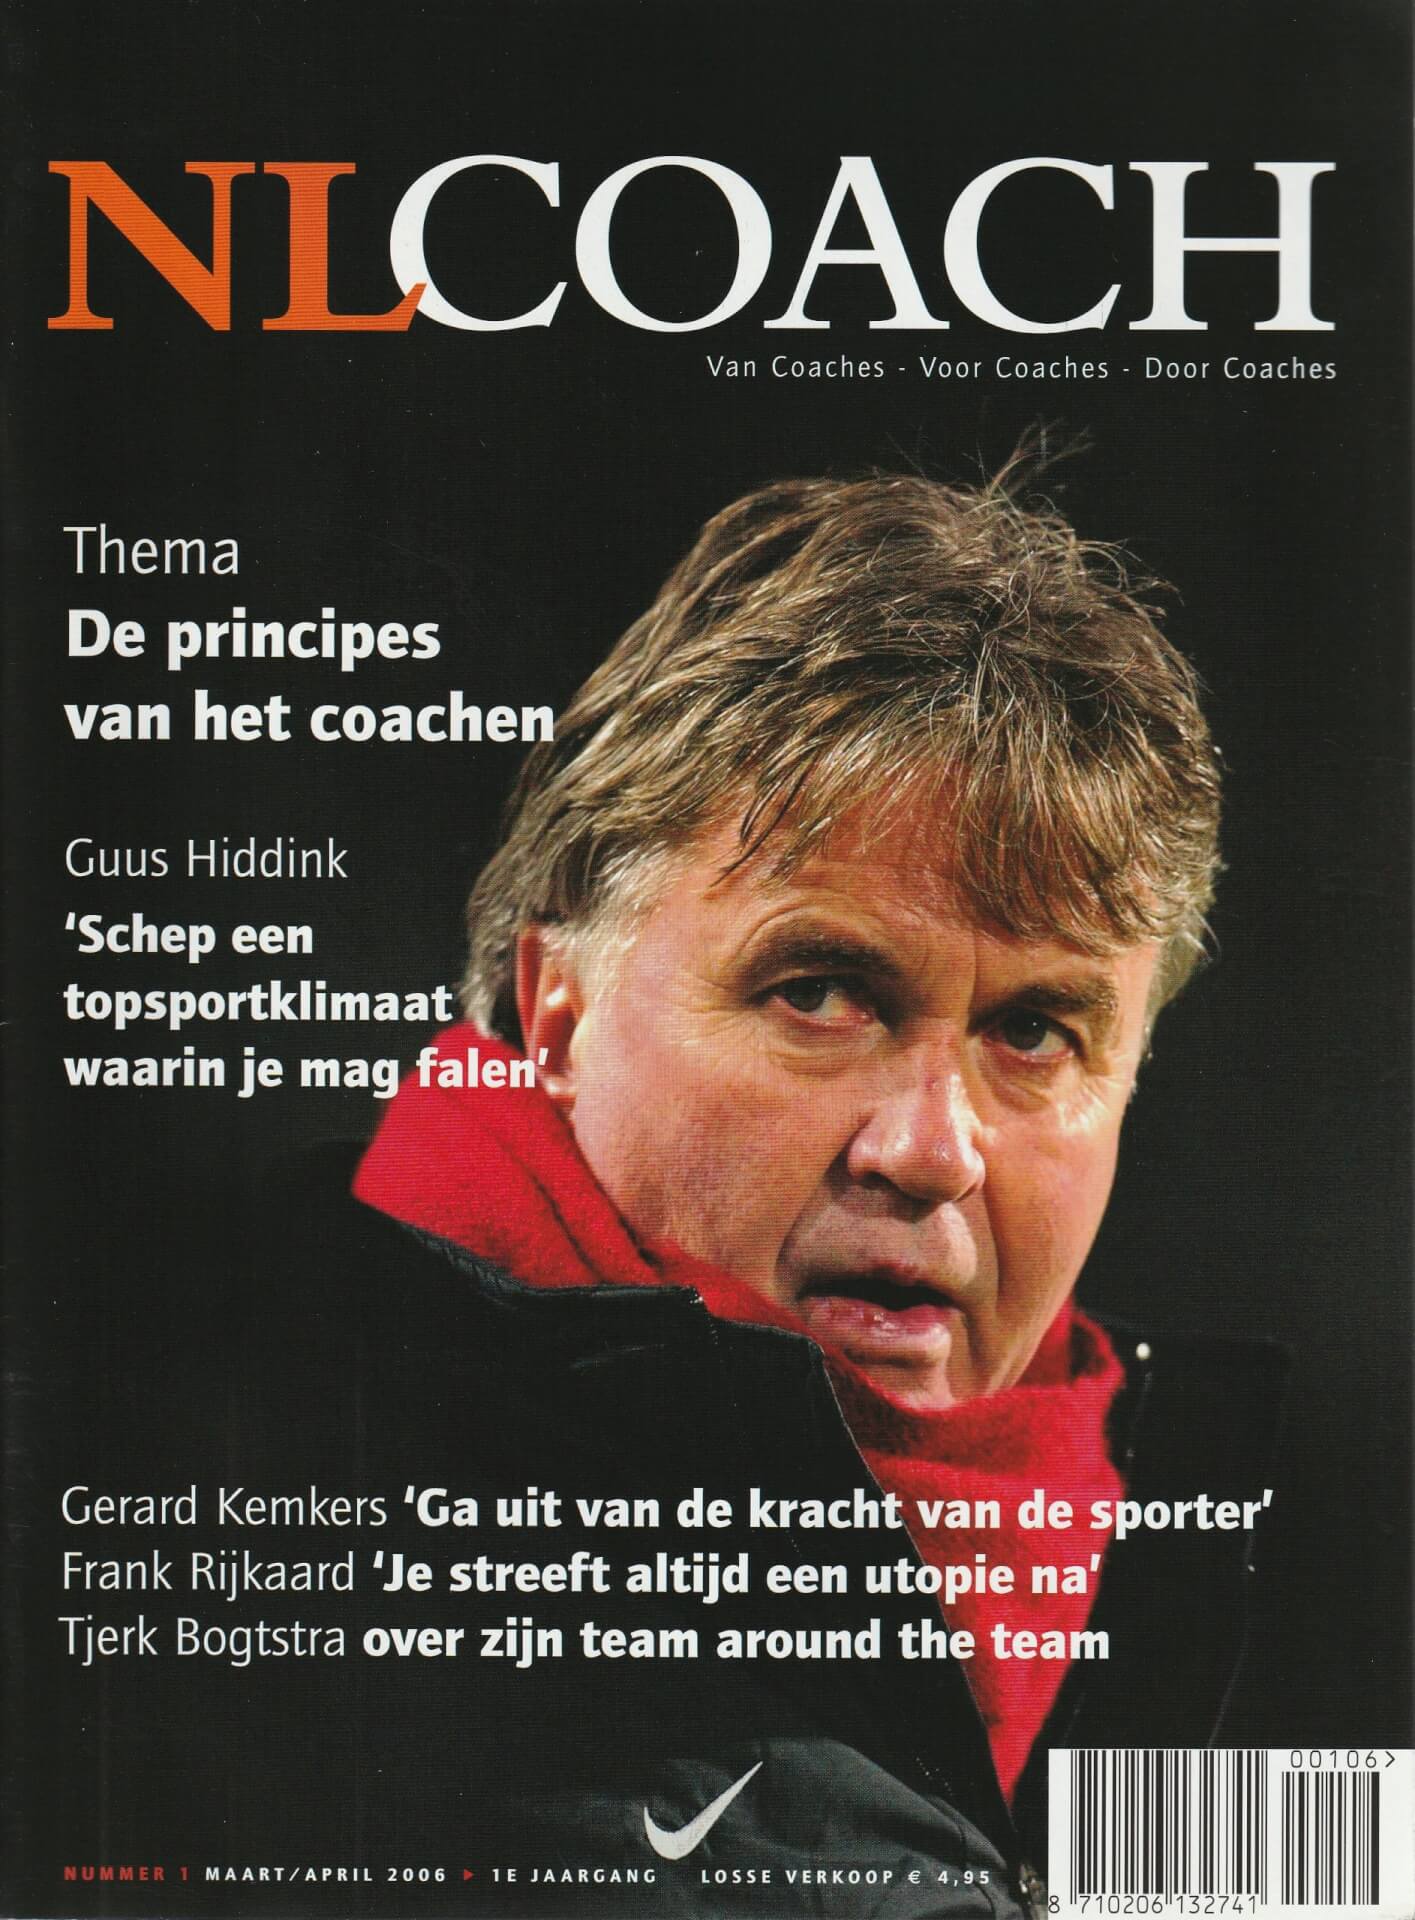 NL Coach main image